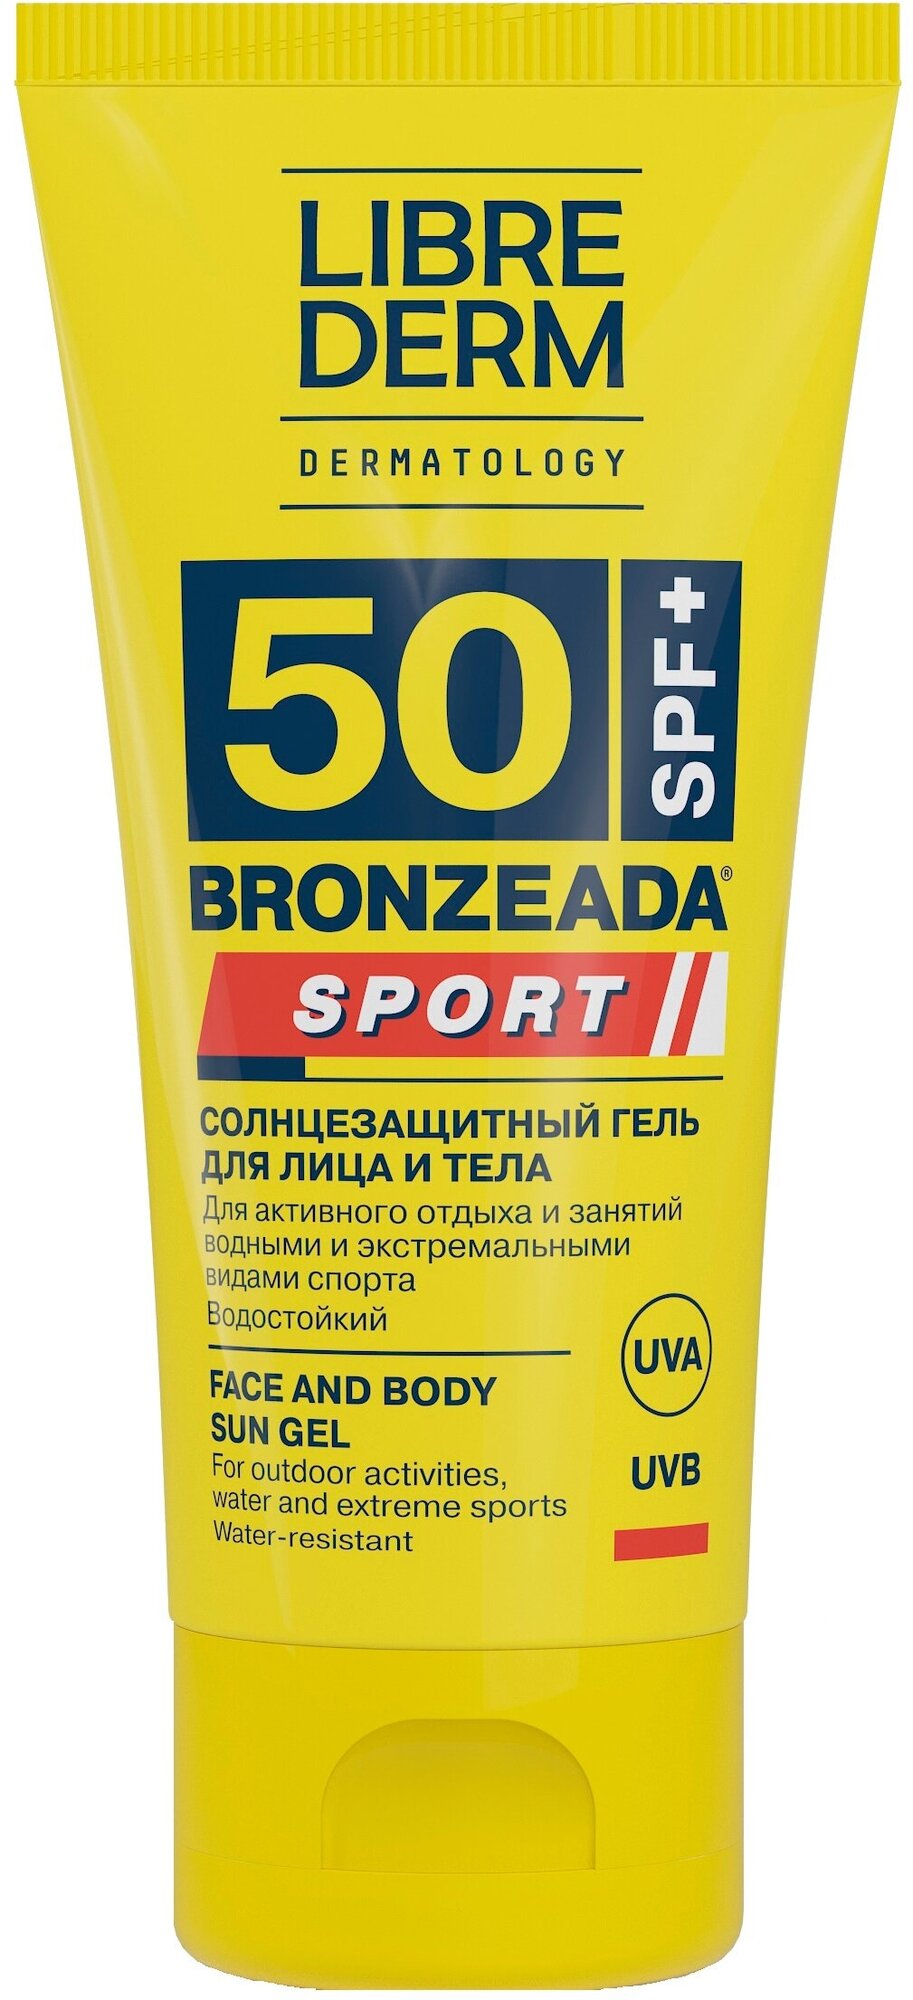 LIBREDERM Гель для лица и тела Librederm Bronzeada Sport cолнцезащитный SPF 50, 50 мл